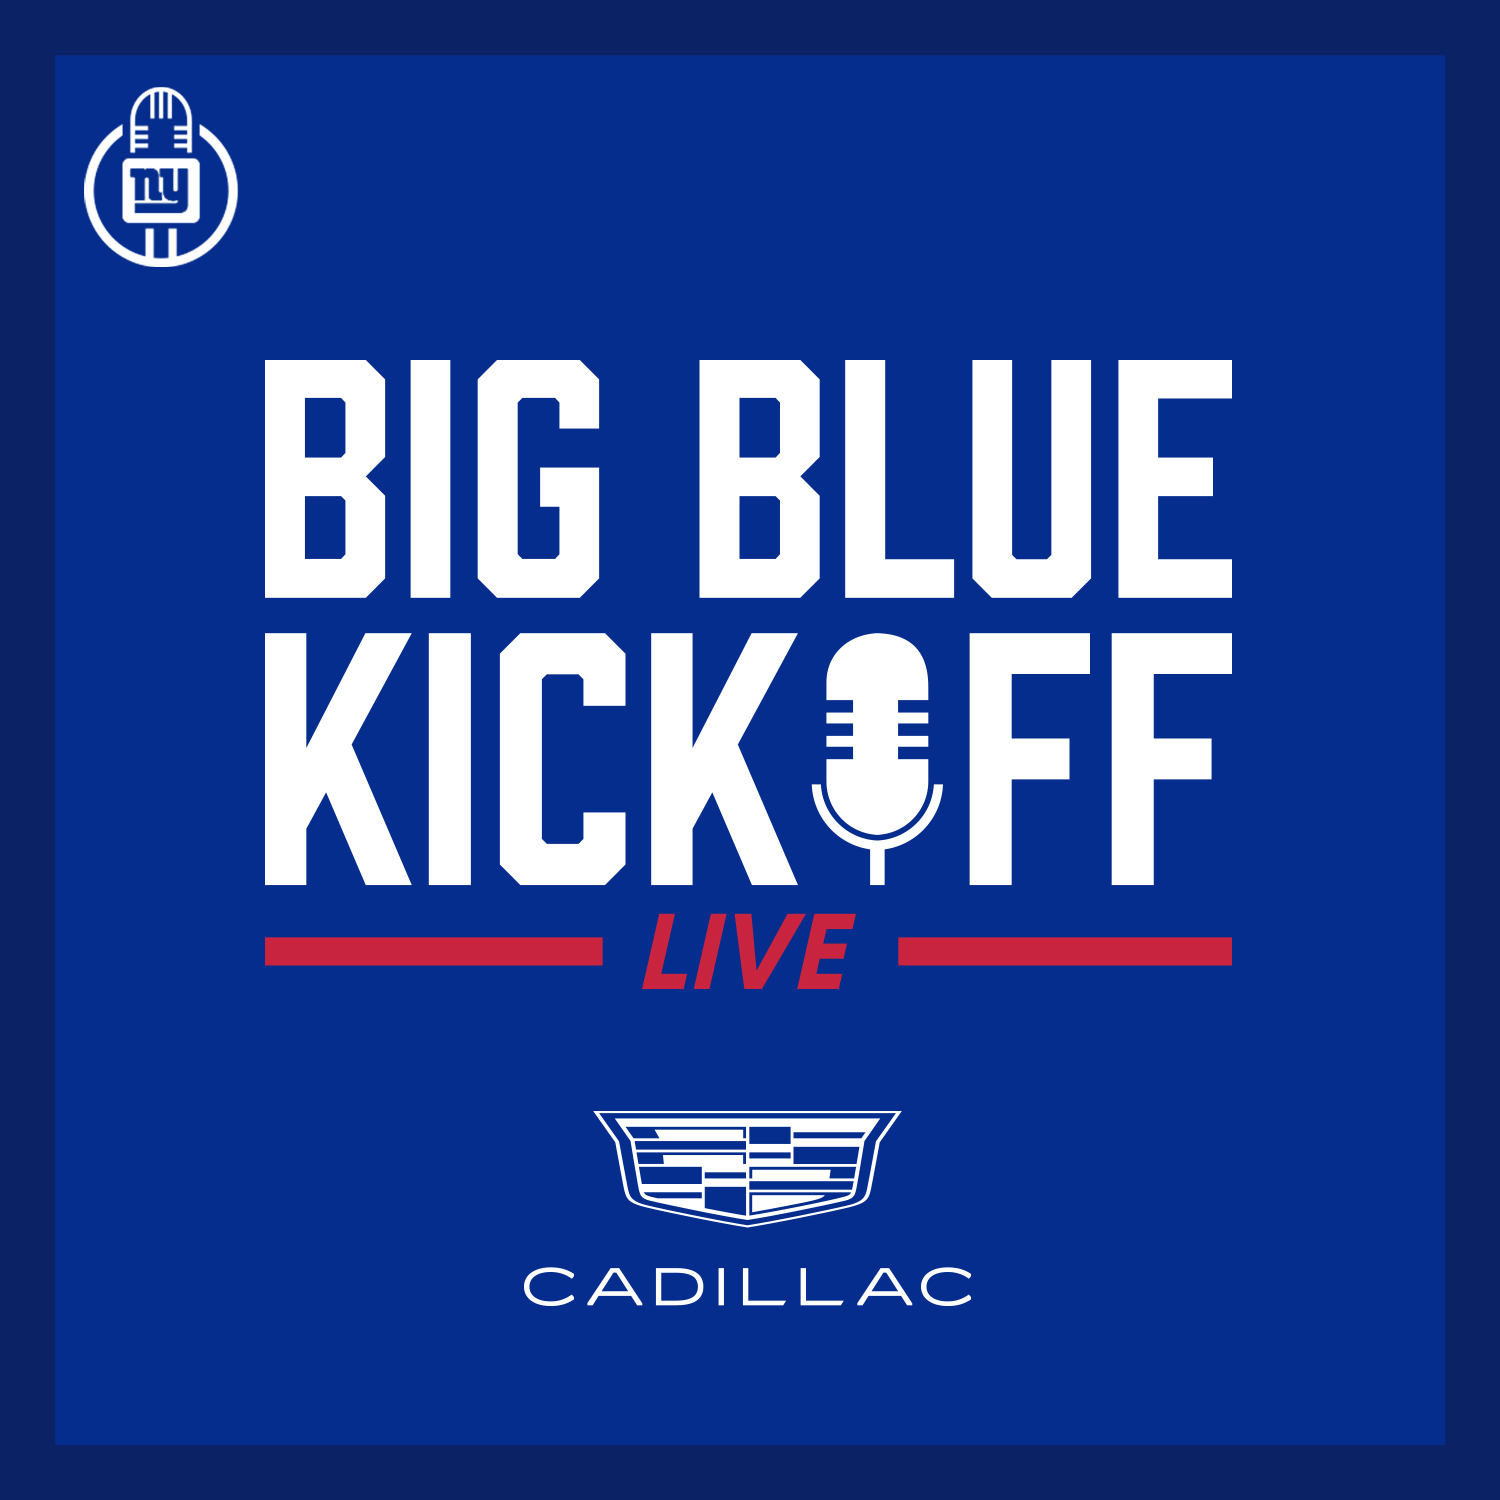 Big Blue Kickoff Live (2/14) | Free agency around the corner